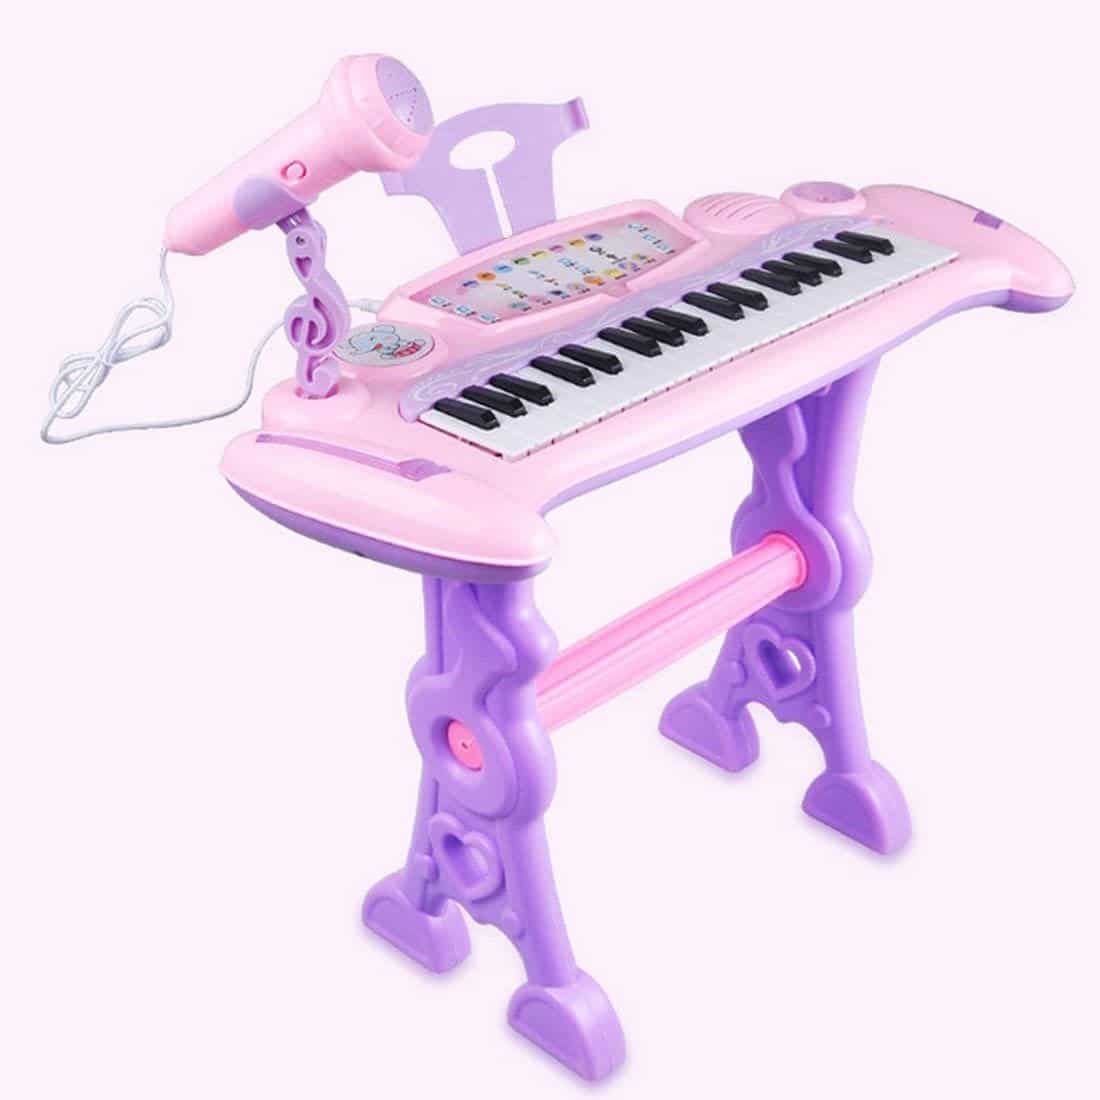 Children’s Toy Piano